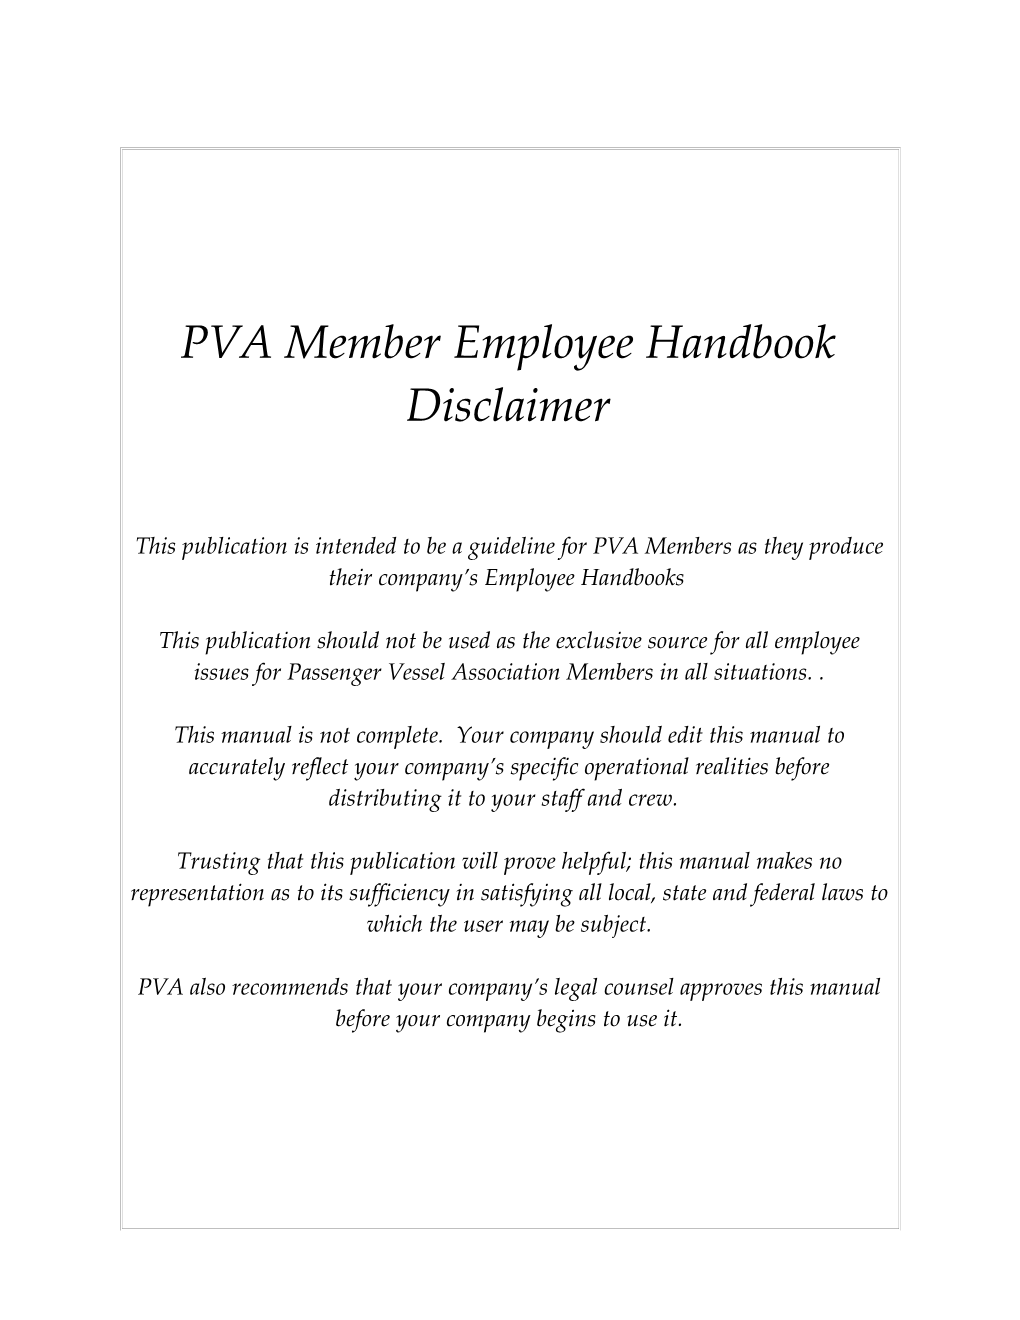 PVA Member Employee Handbook Disclaimer